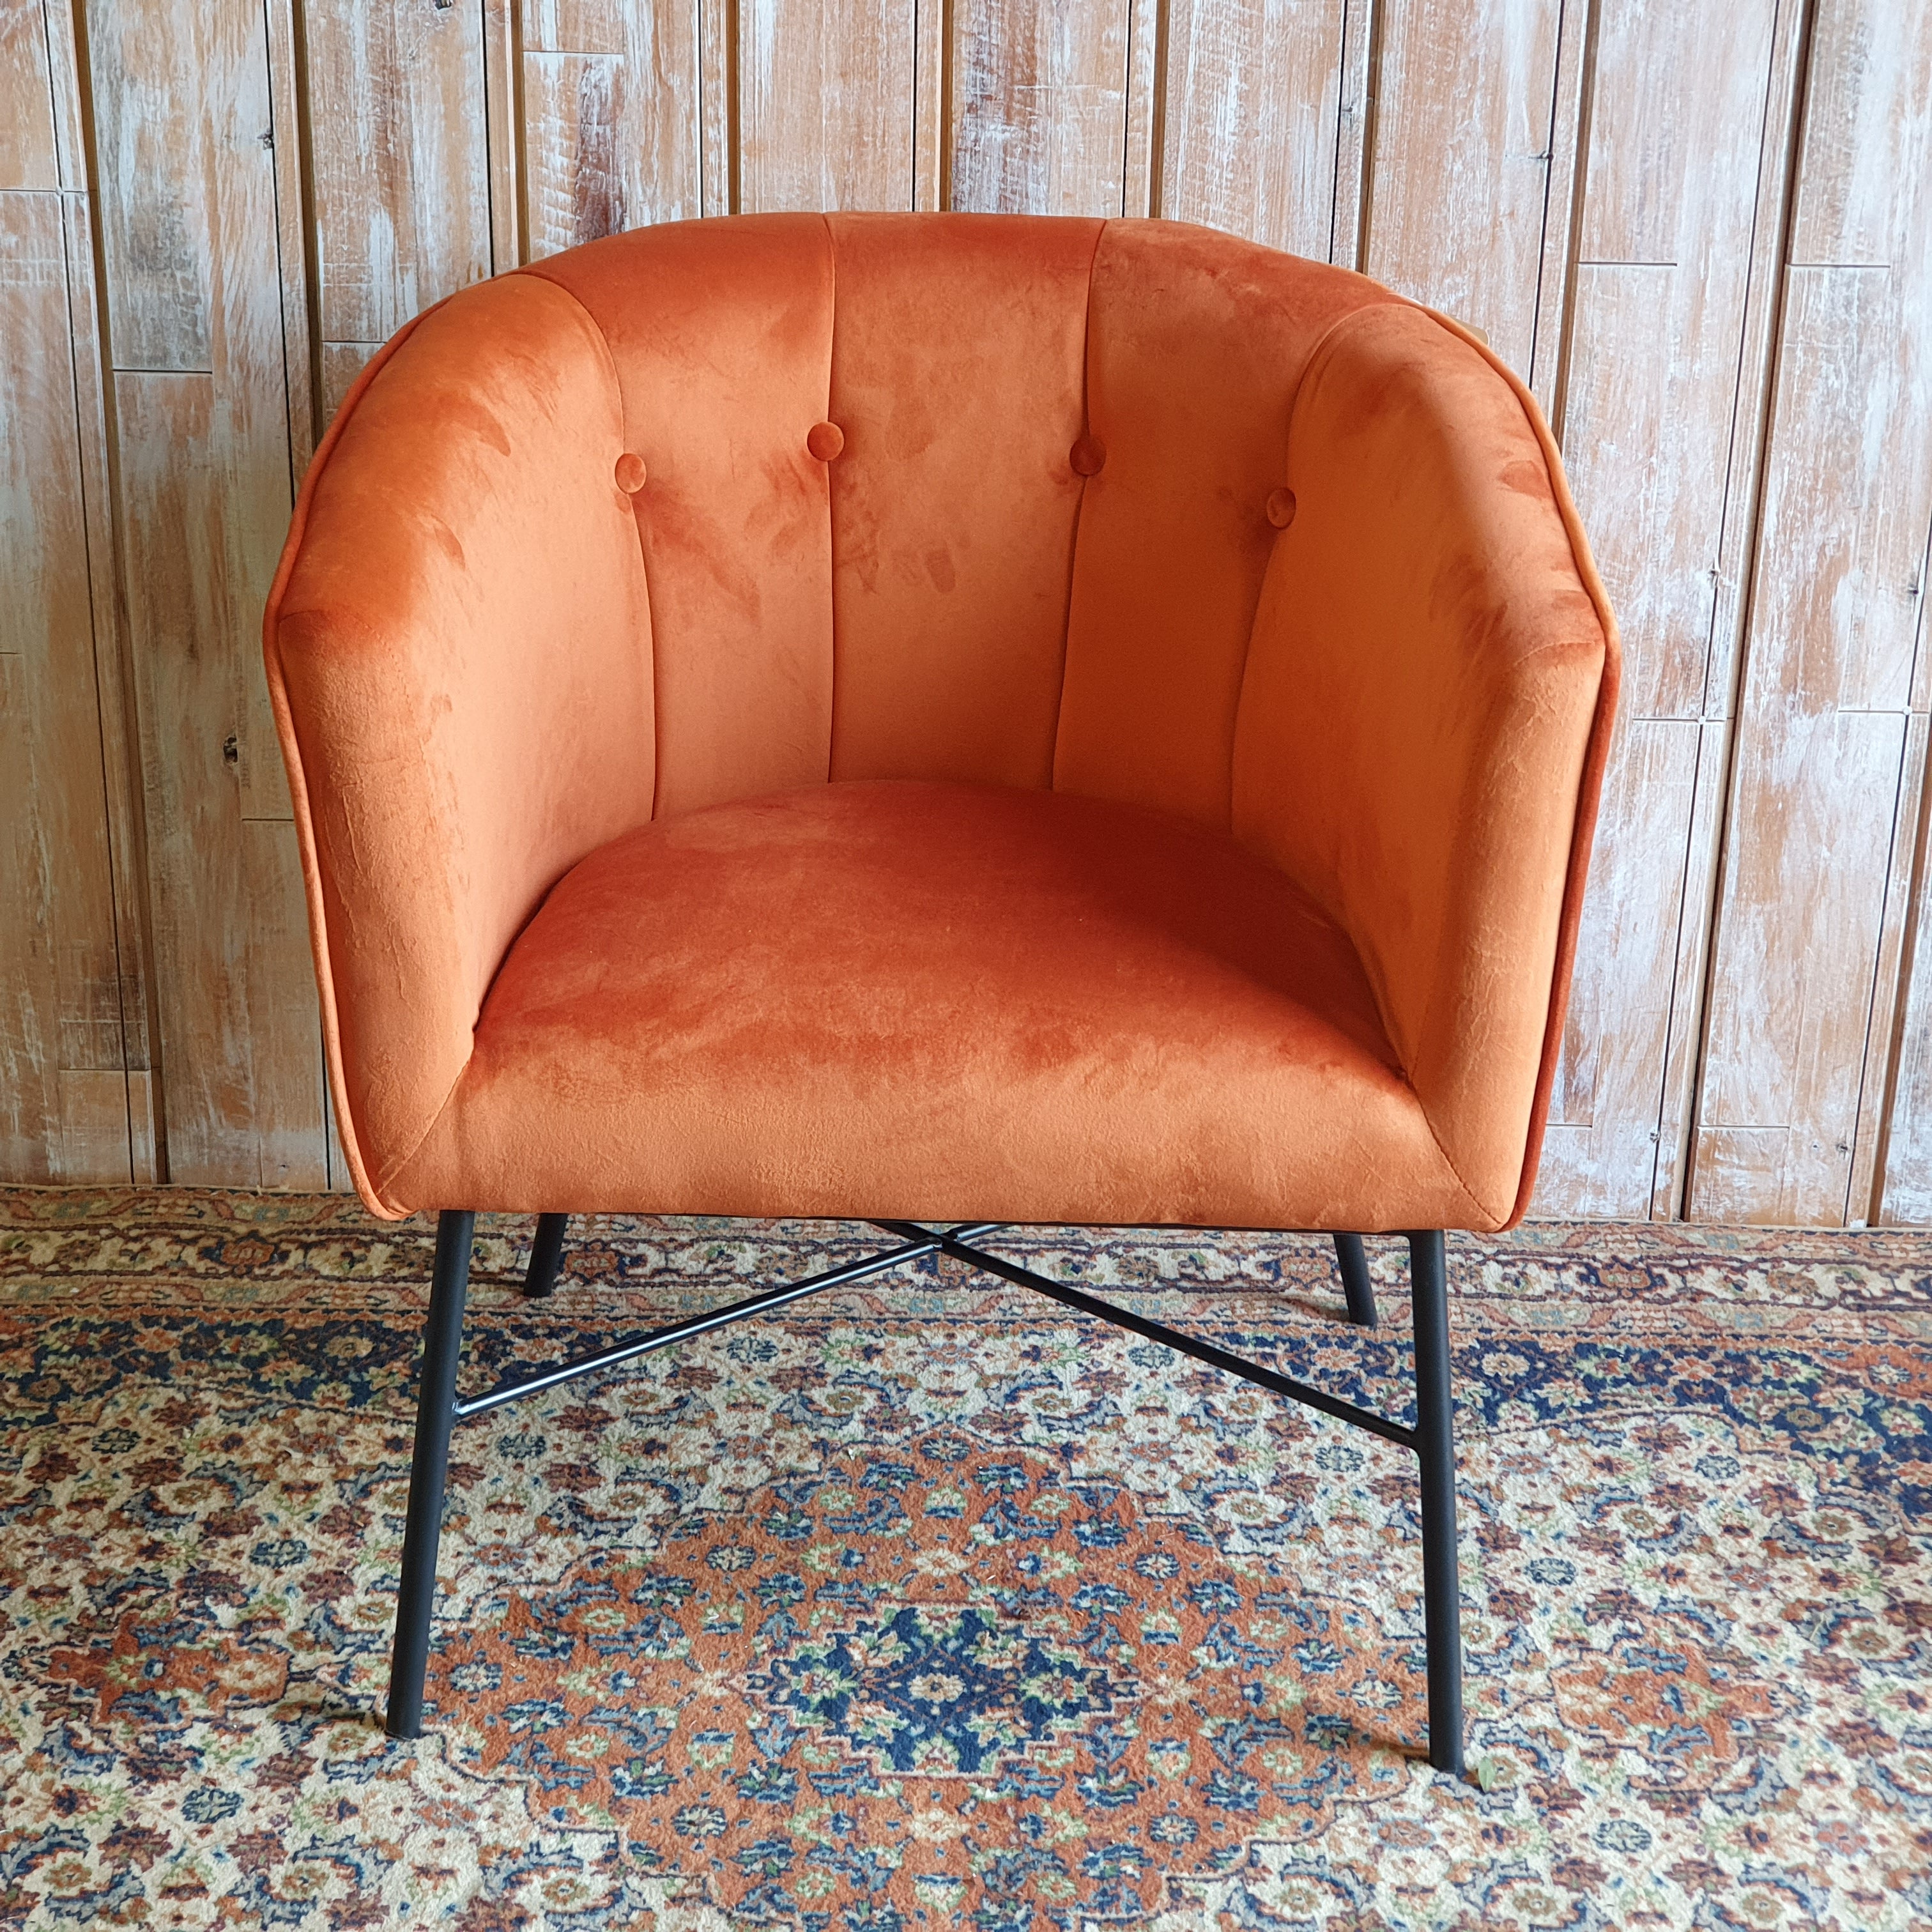 HOXTON: Contemporary Orange Bucket Chair